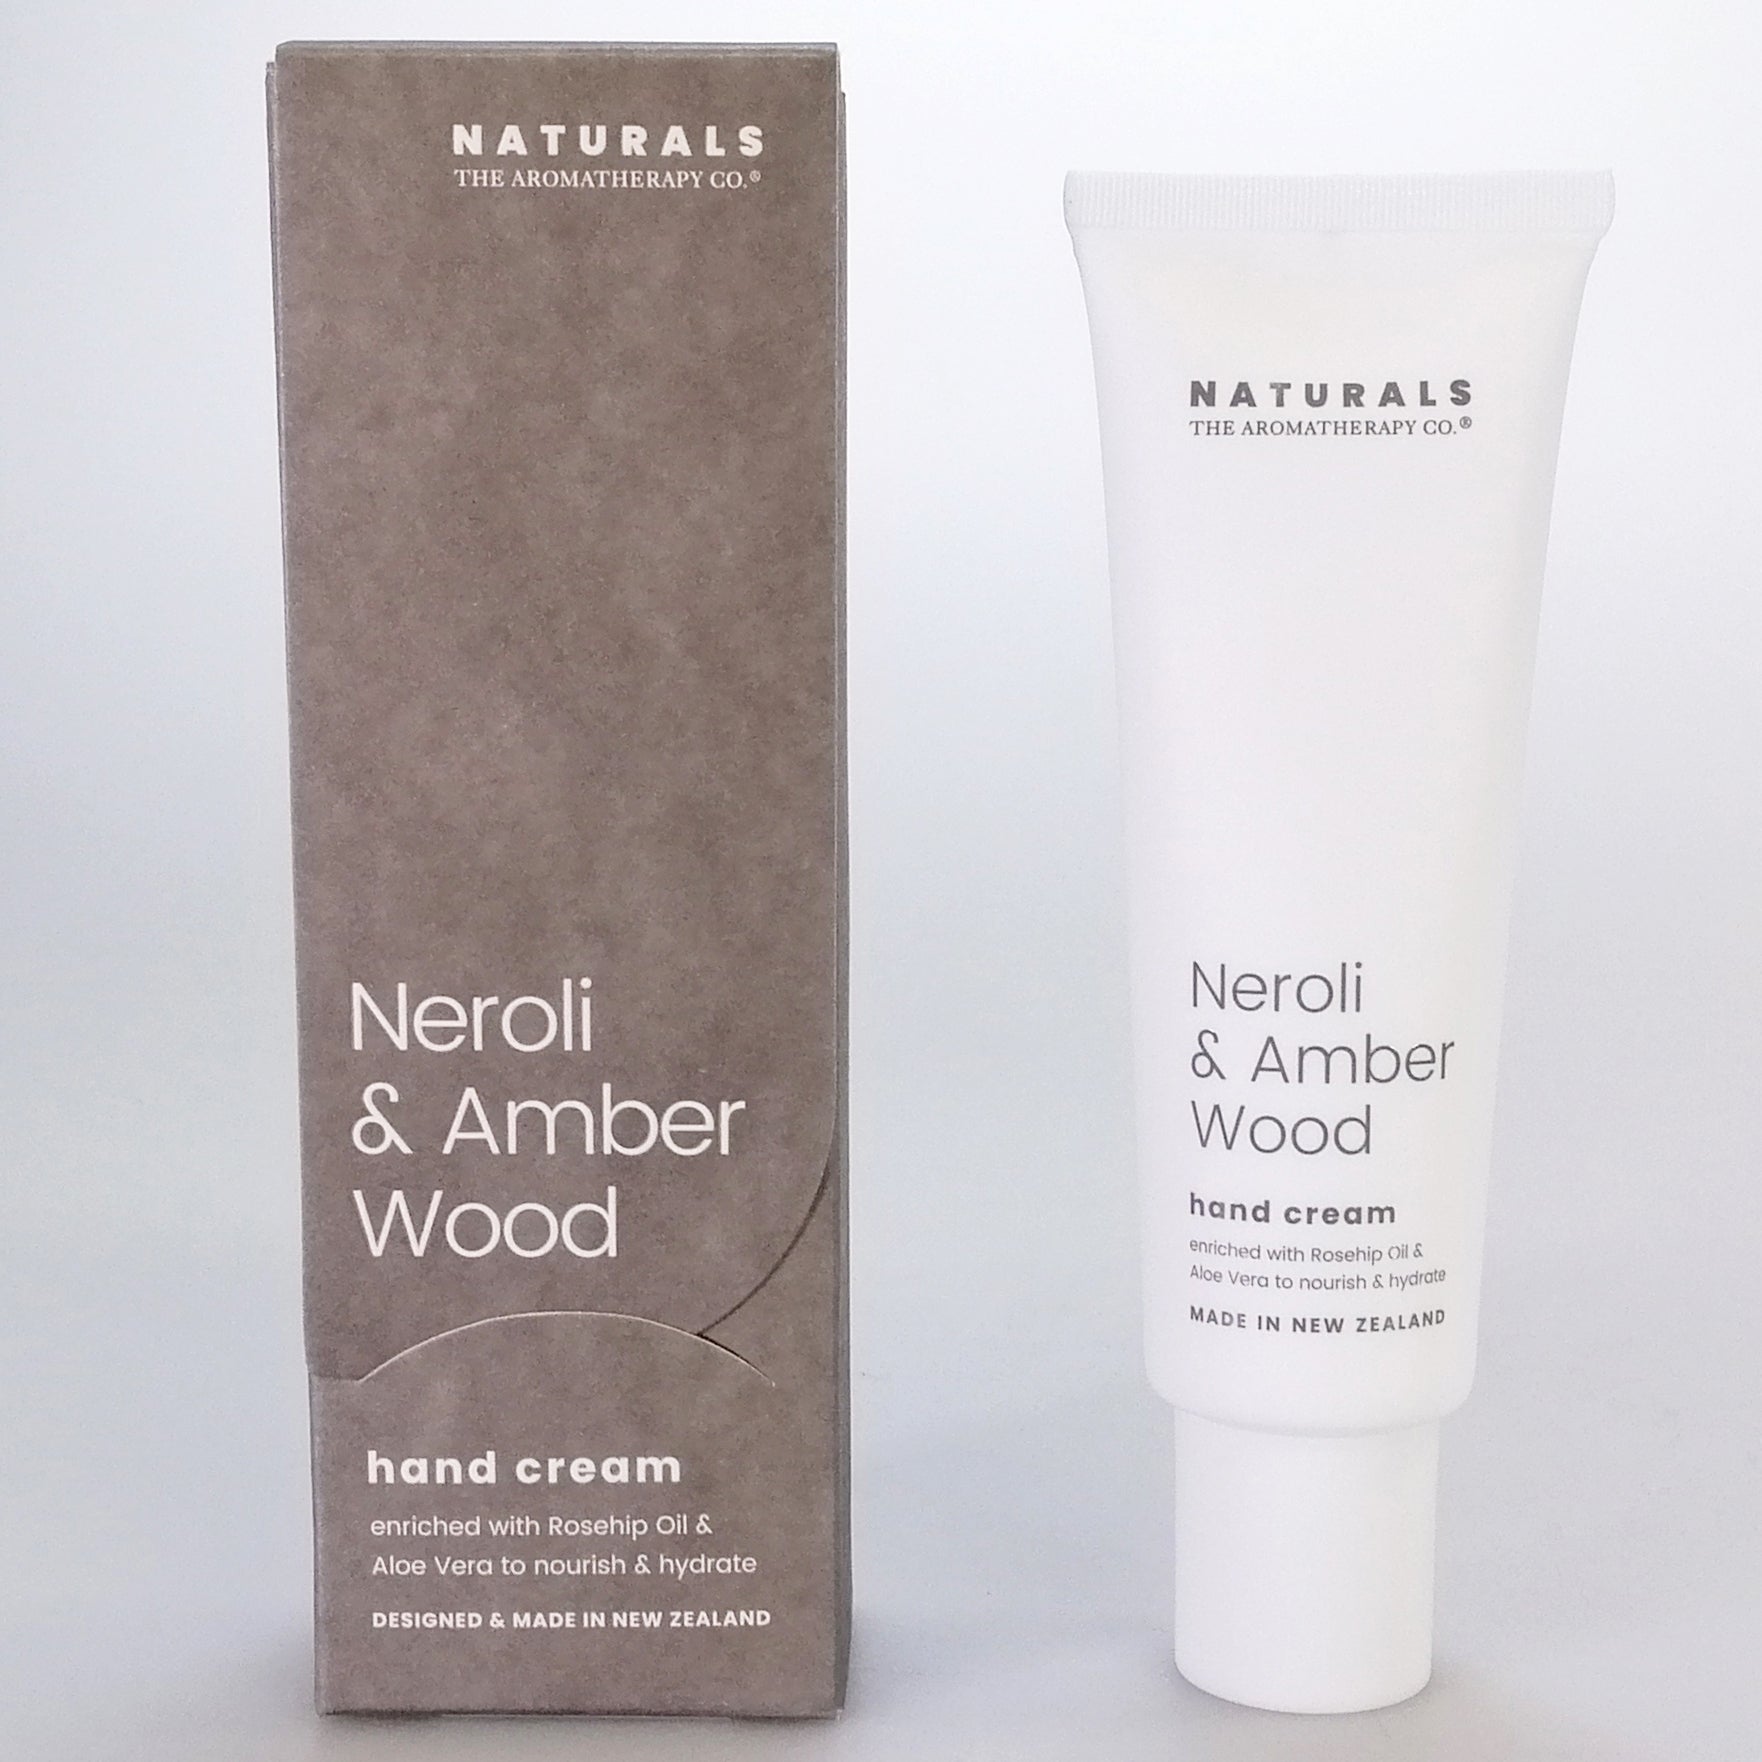 The Aromatherapy Co. Naturals - Neroli & Amber Wood Hand Cream